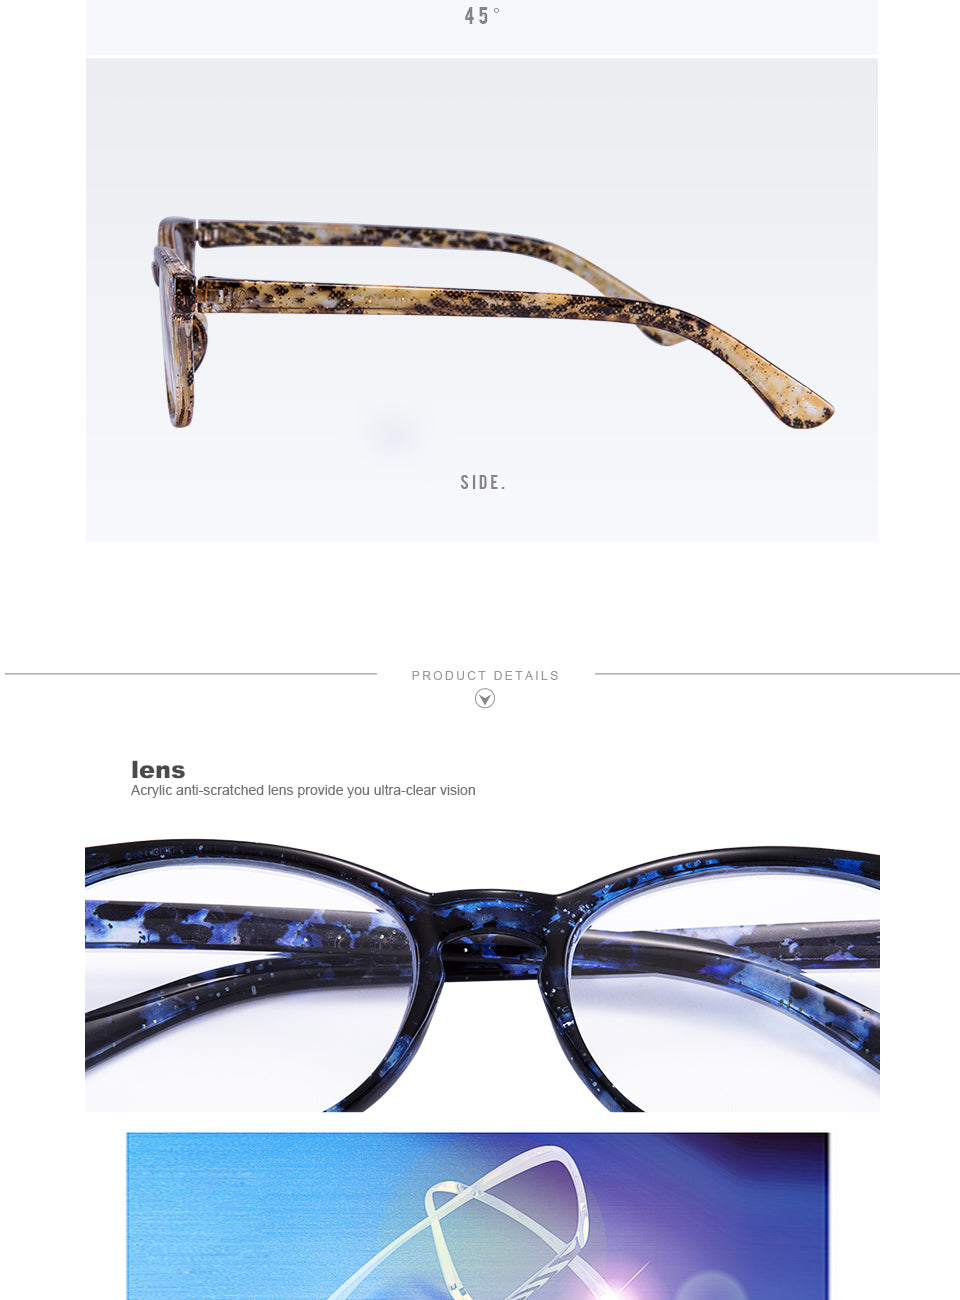 Eyeguard Brand Women's Reading Glasses Anti-Reflective 4 Pack Quality L-1604 Reading Glasses Eyeguard   